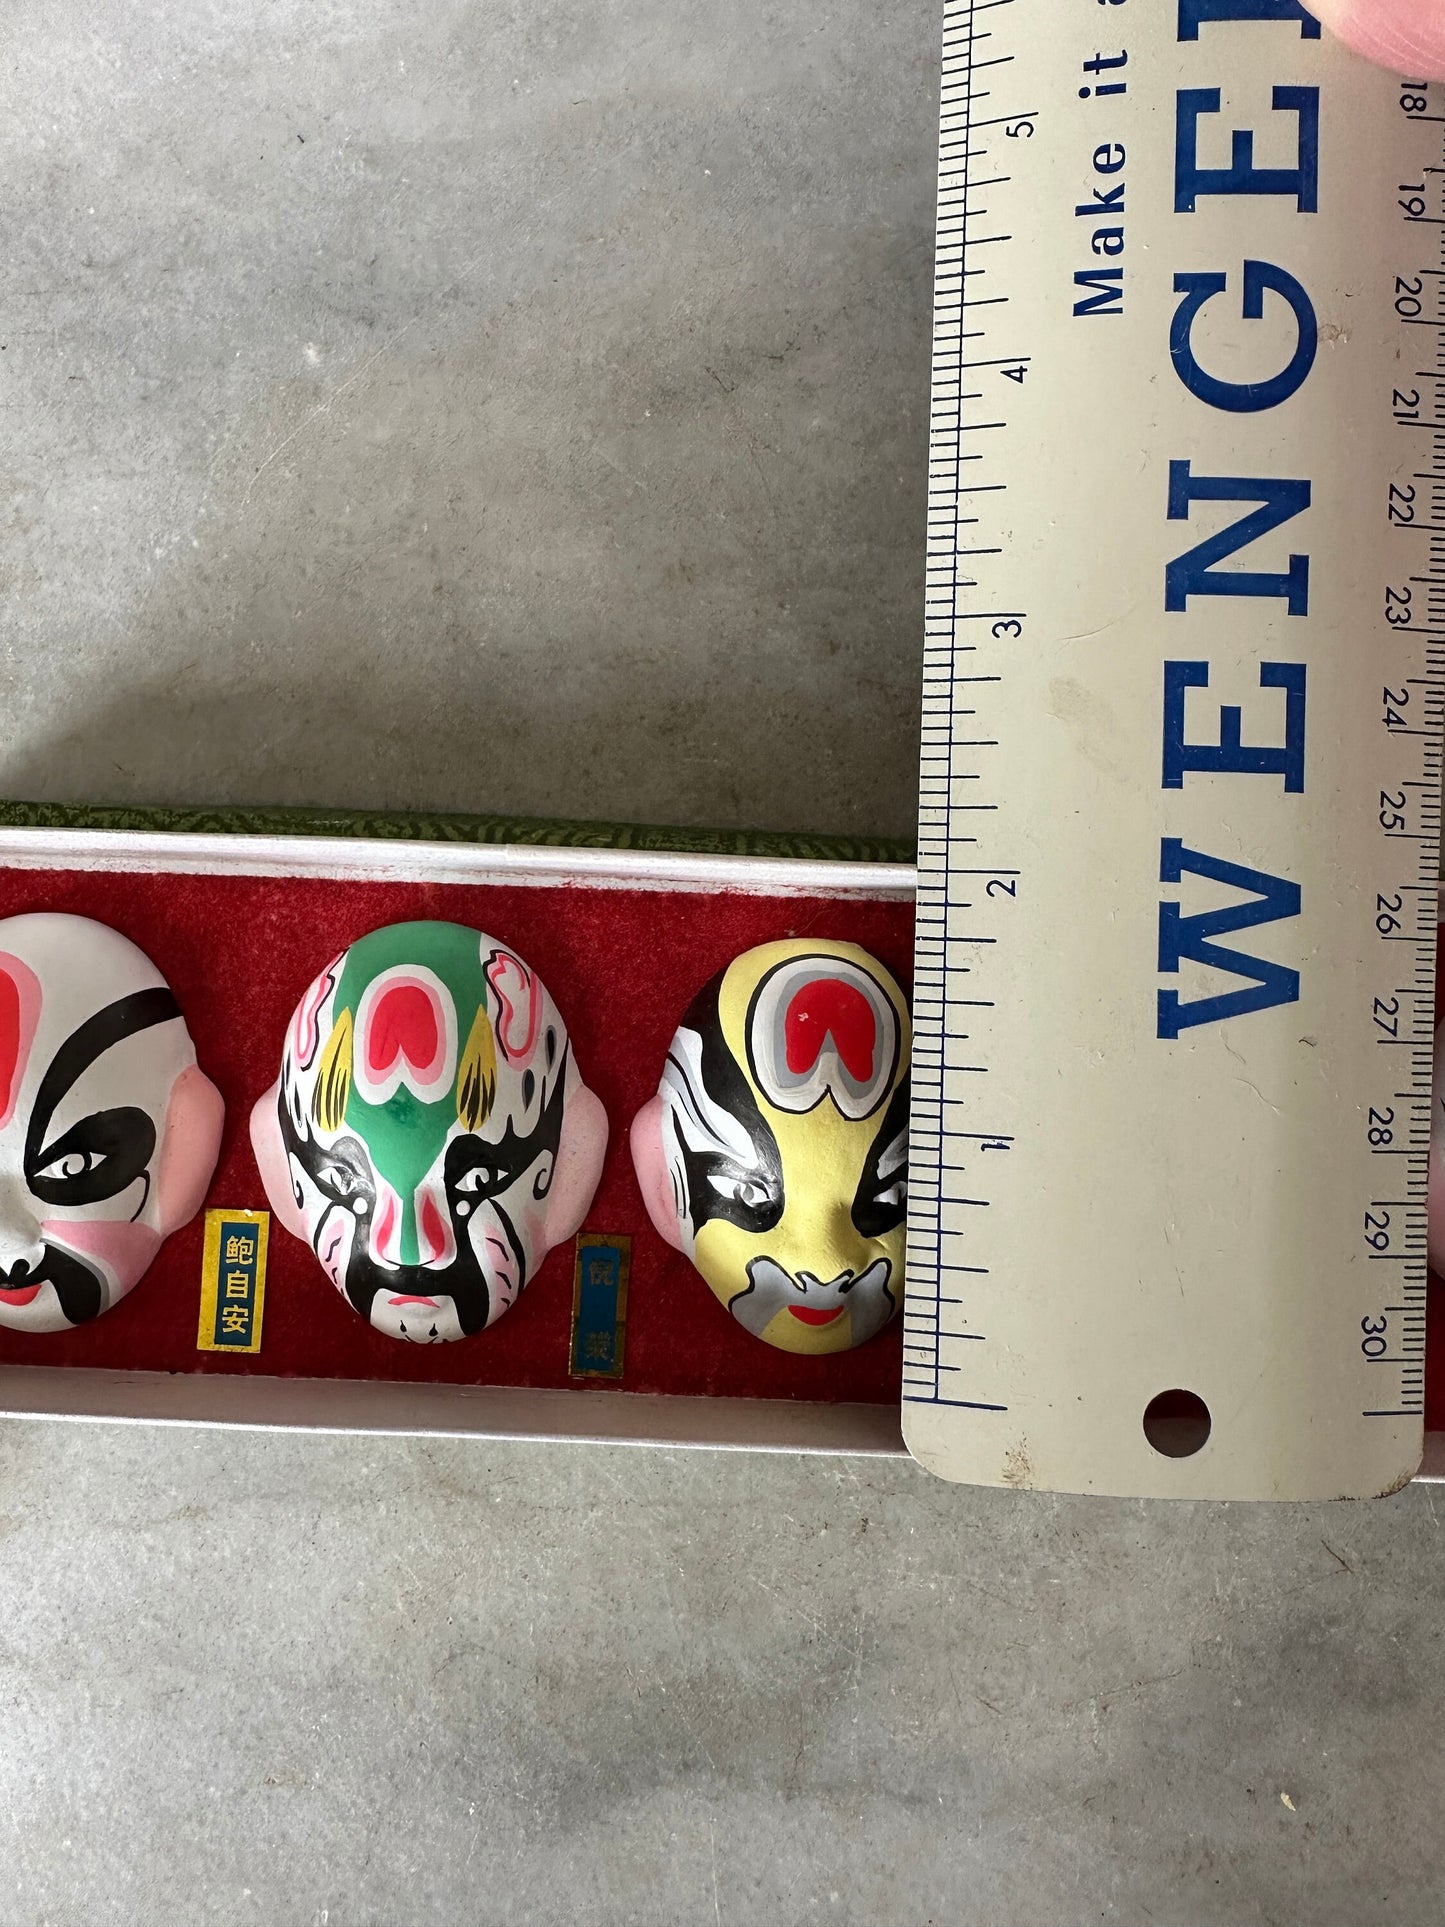 Chinese Opera Masks Miniature Chinese Opera Facial Make Up Masks Red Blue Green White Set of 6 Mini Chinese Opera Masks In Velvet Lined Box